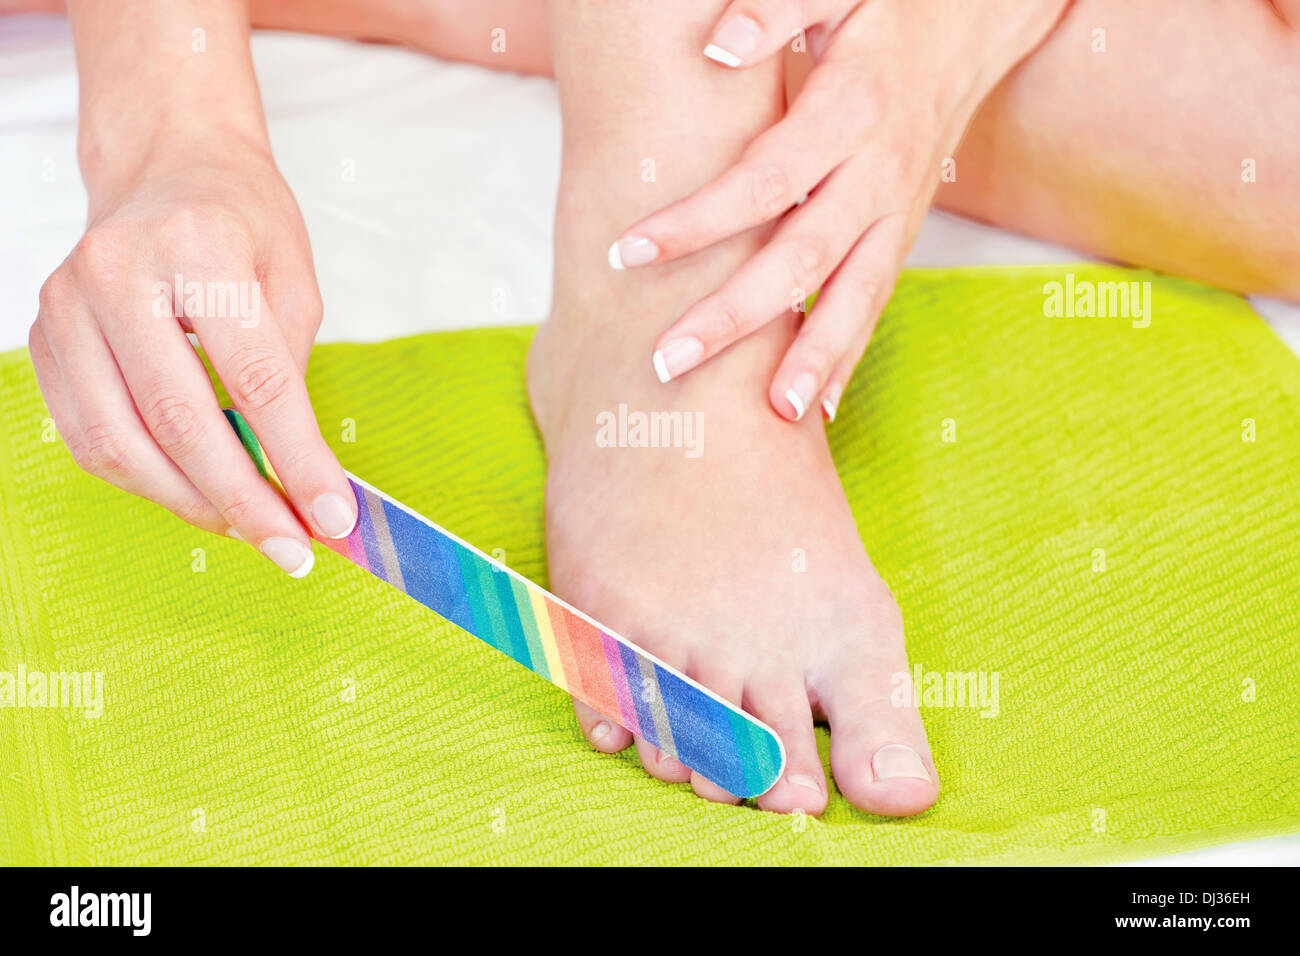 feet beauty treatment with nail file Stock Photo